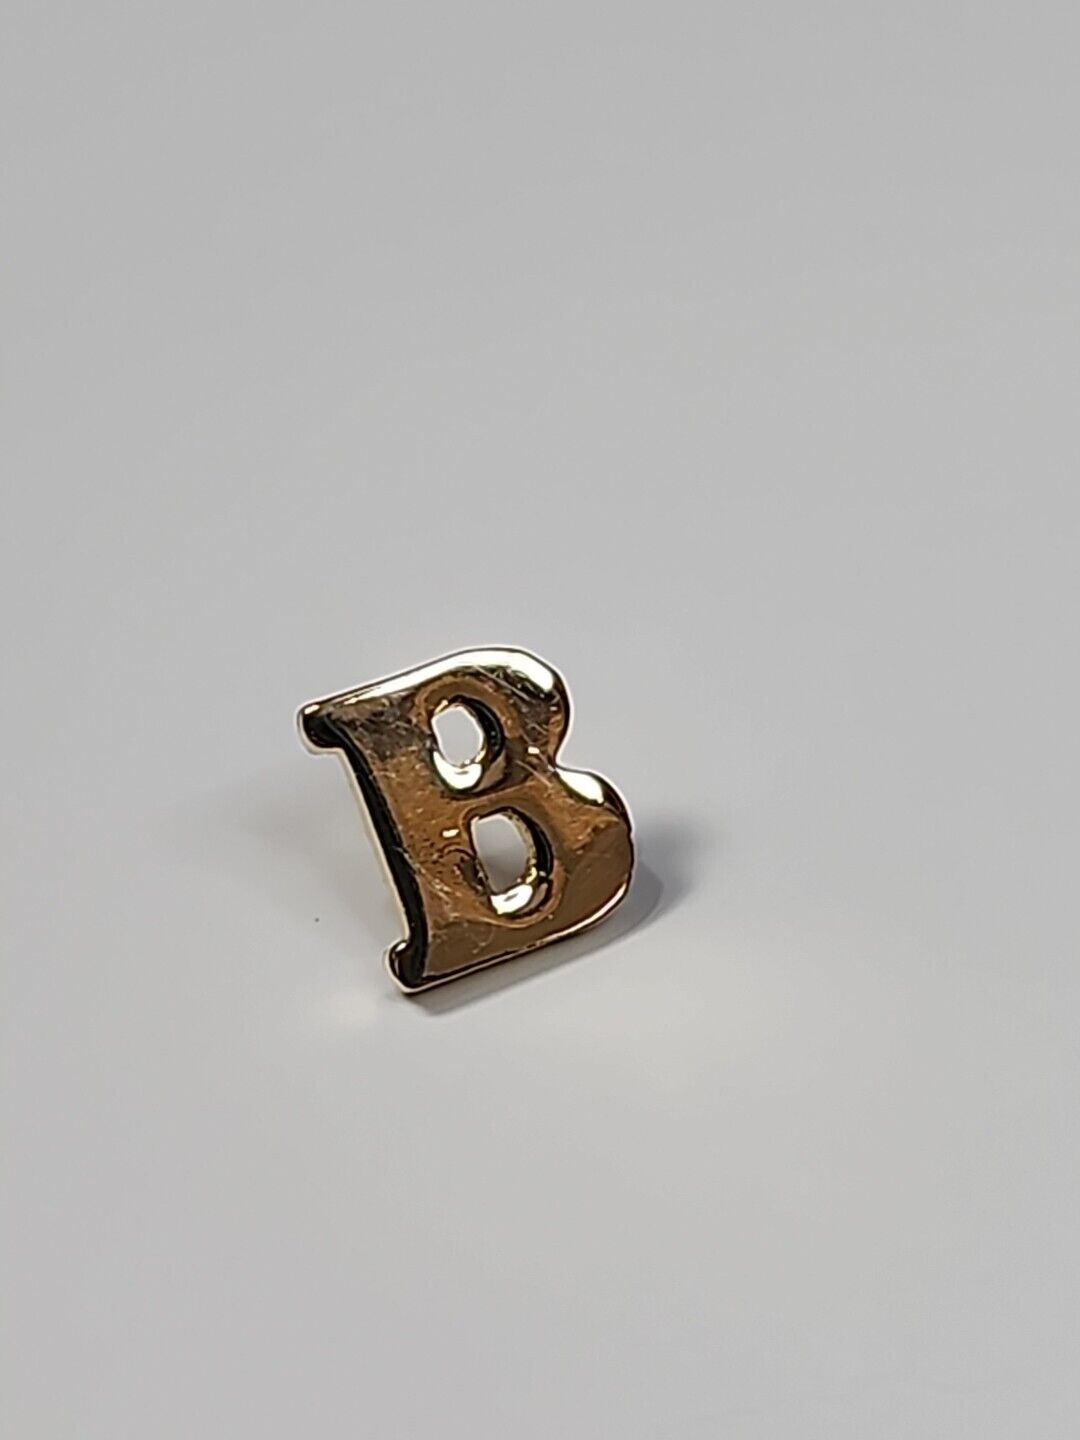 Avon Letter B Tie Tack Lapel Pin Gold Color Metal Initial*